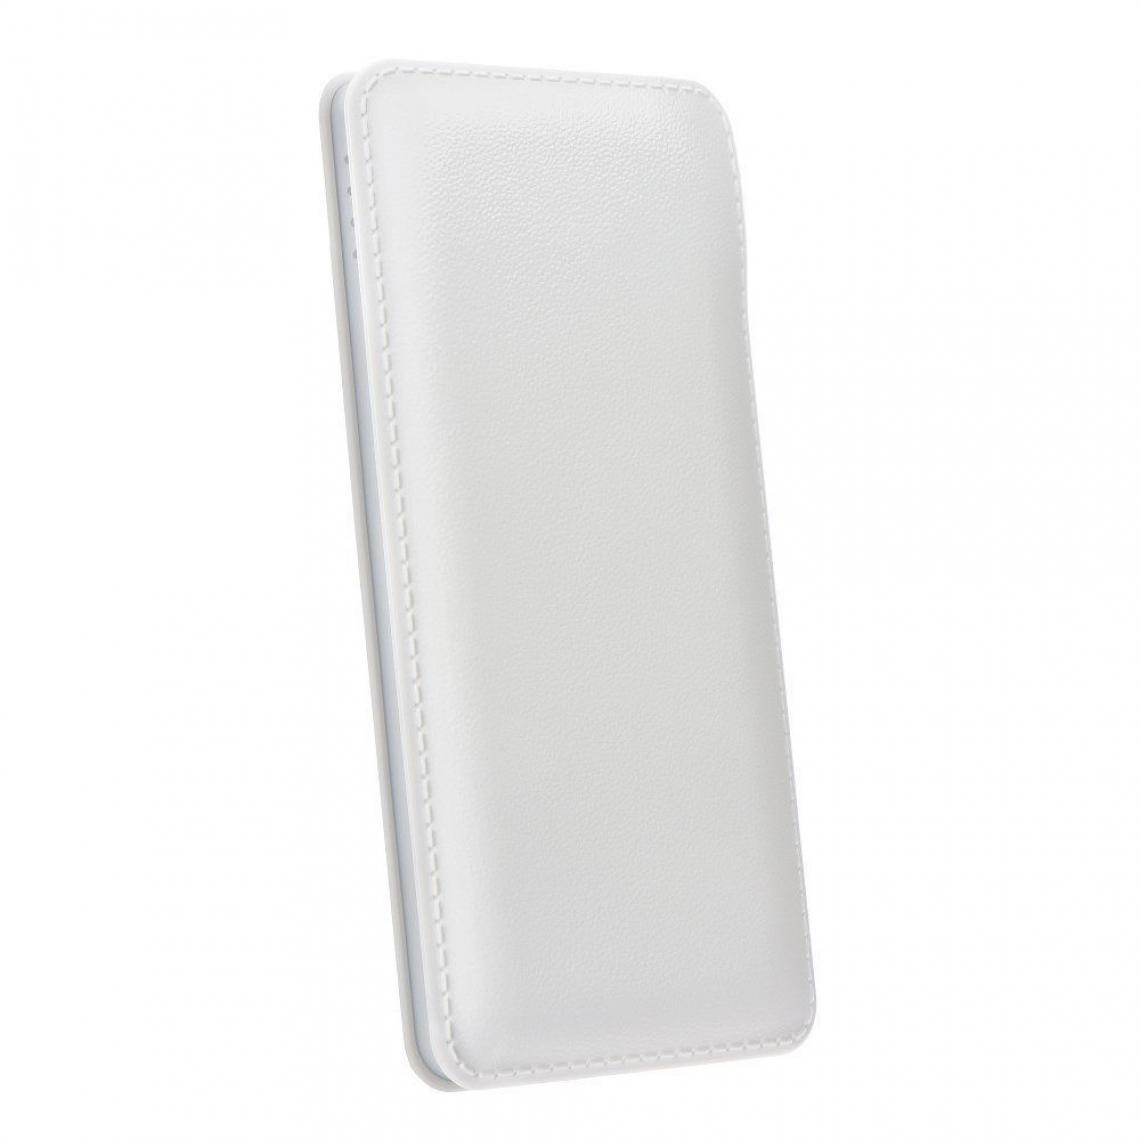 Ozzzo - Chargeur batterie externe 30000 mAh powerbank ozzzo blanc pour Huawei Honor Pad 2 - Autres accessoires smartphone